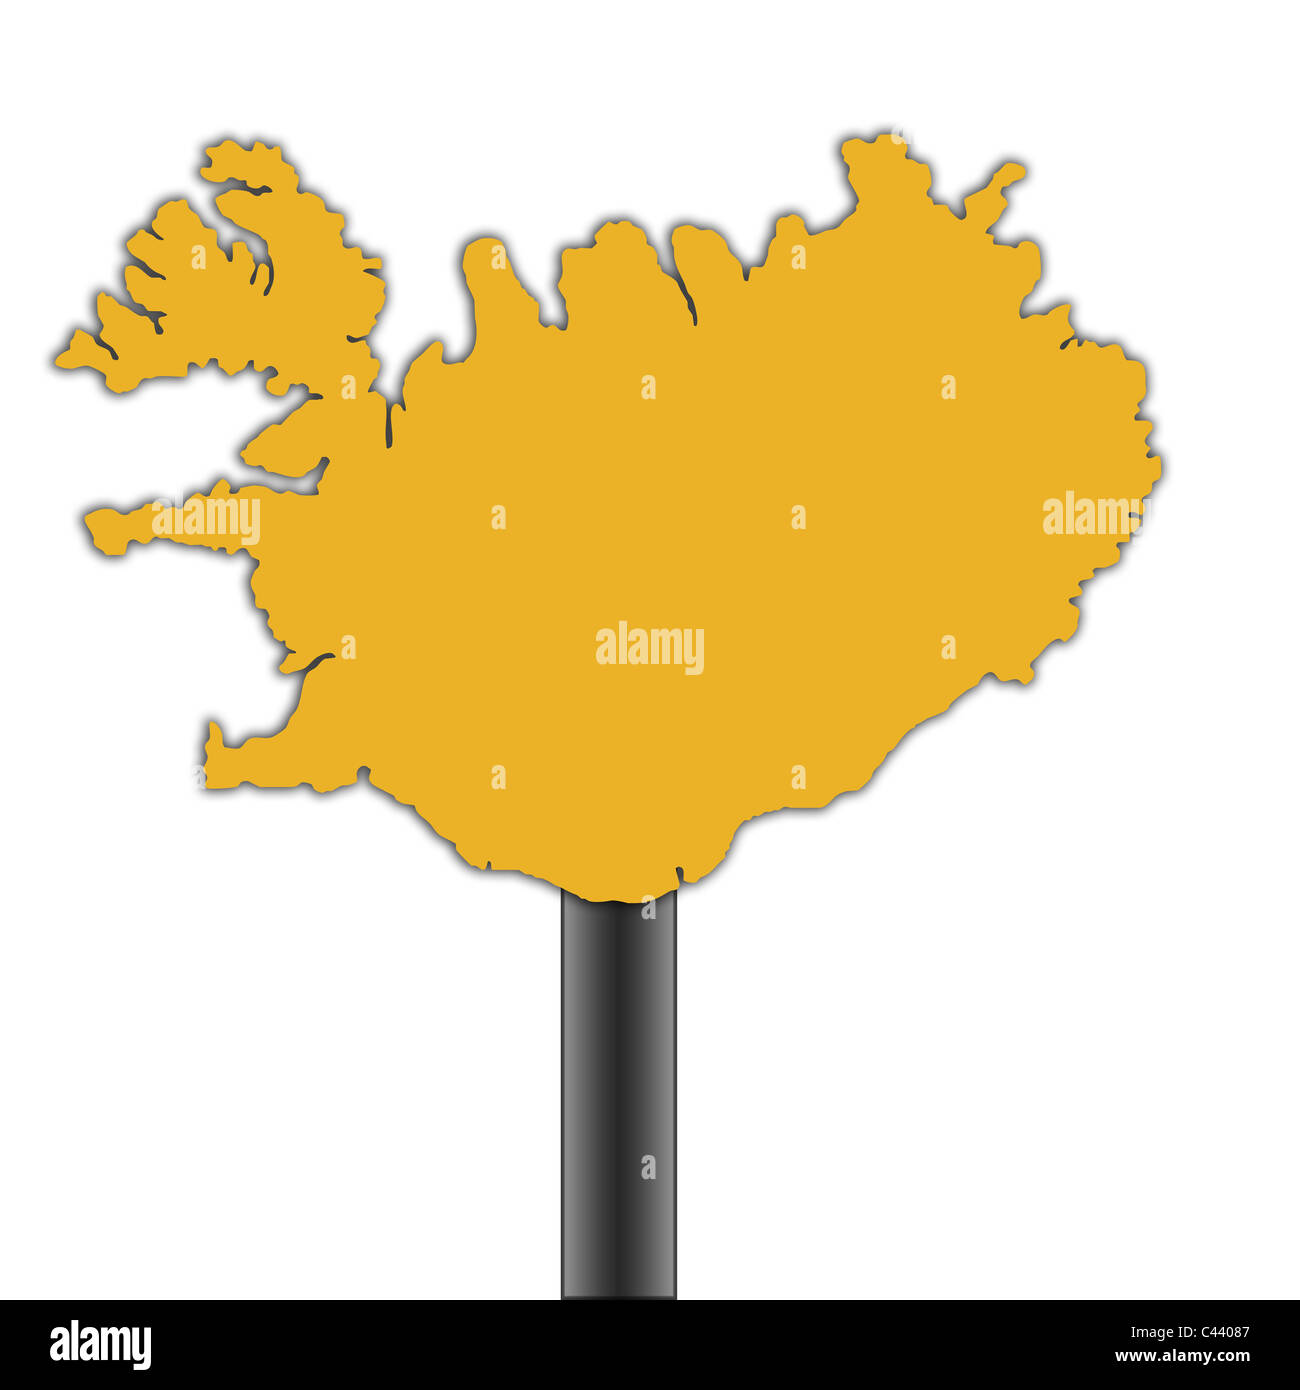 Iceland map road sign isolated on white background Stock Photo